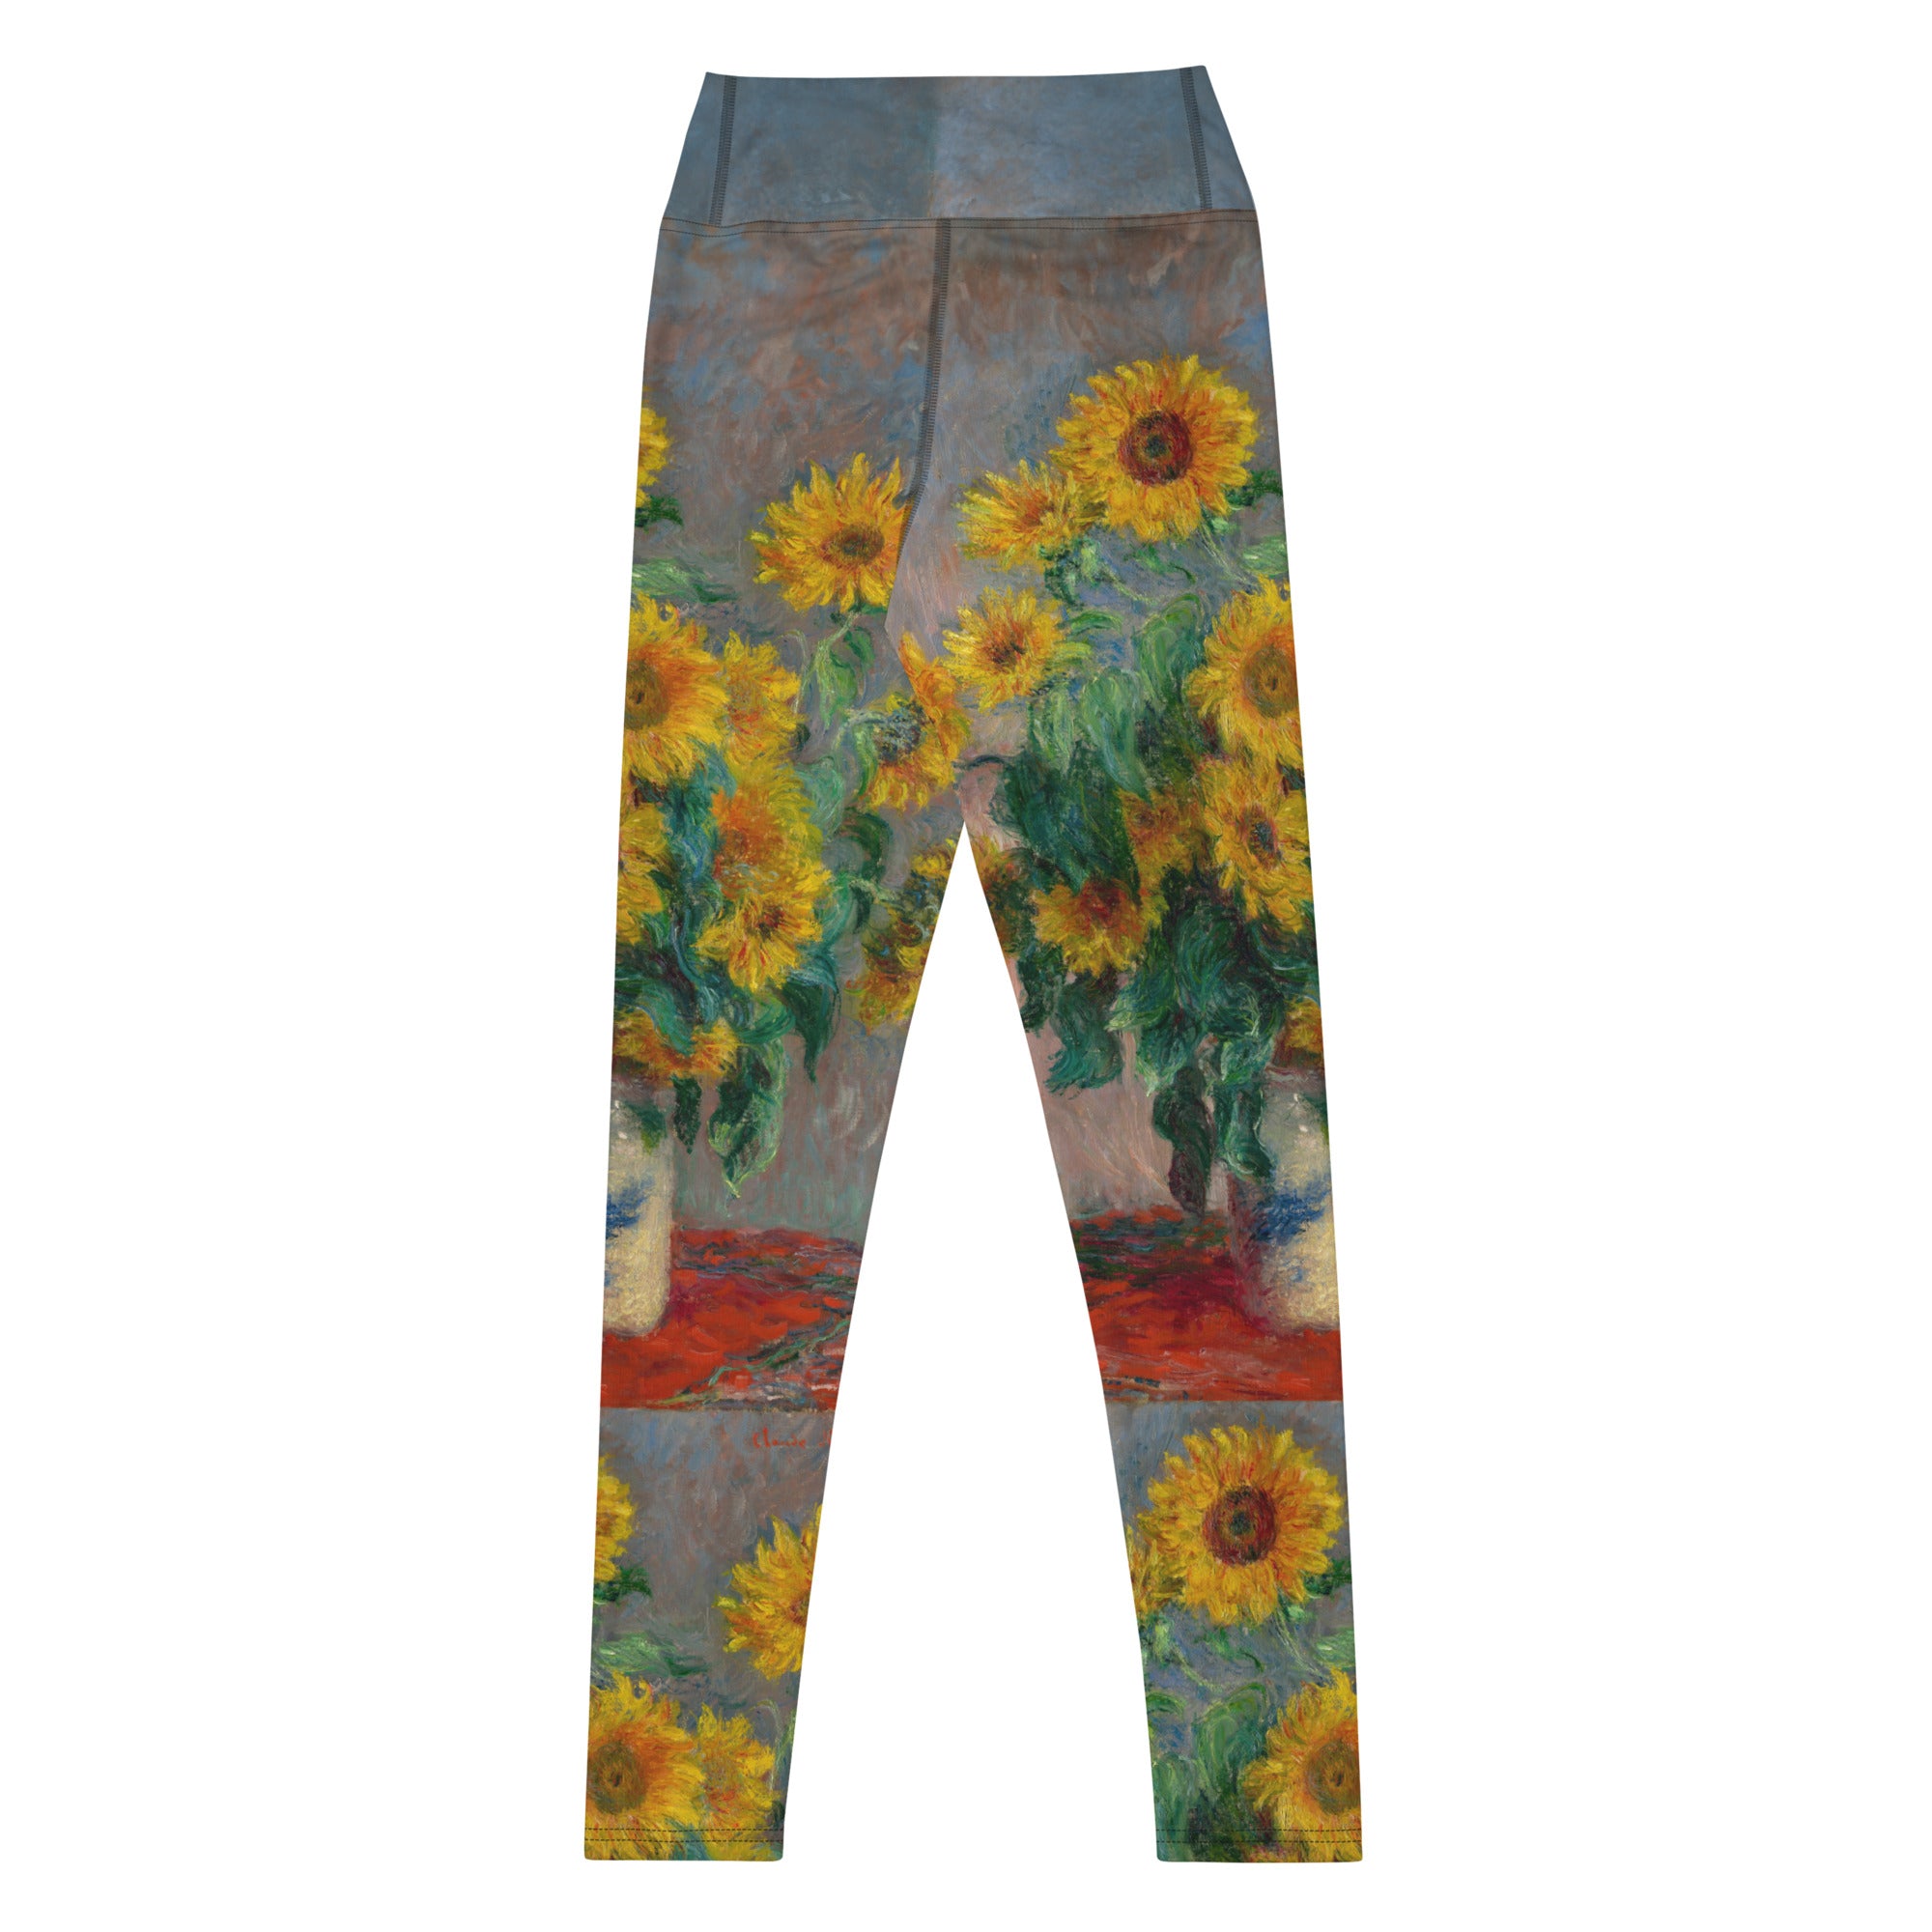 Claude Monet 'Sonnenblumenstrauß' Berühmtes Gemälde Yoga Leggings | Premium Art Yoga Leggings